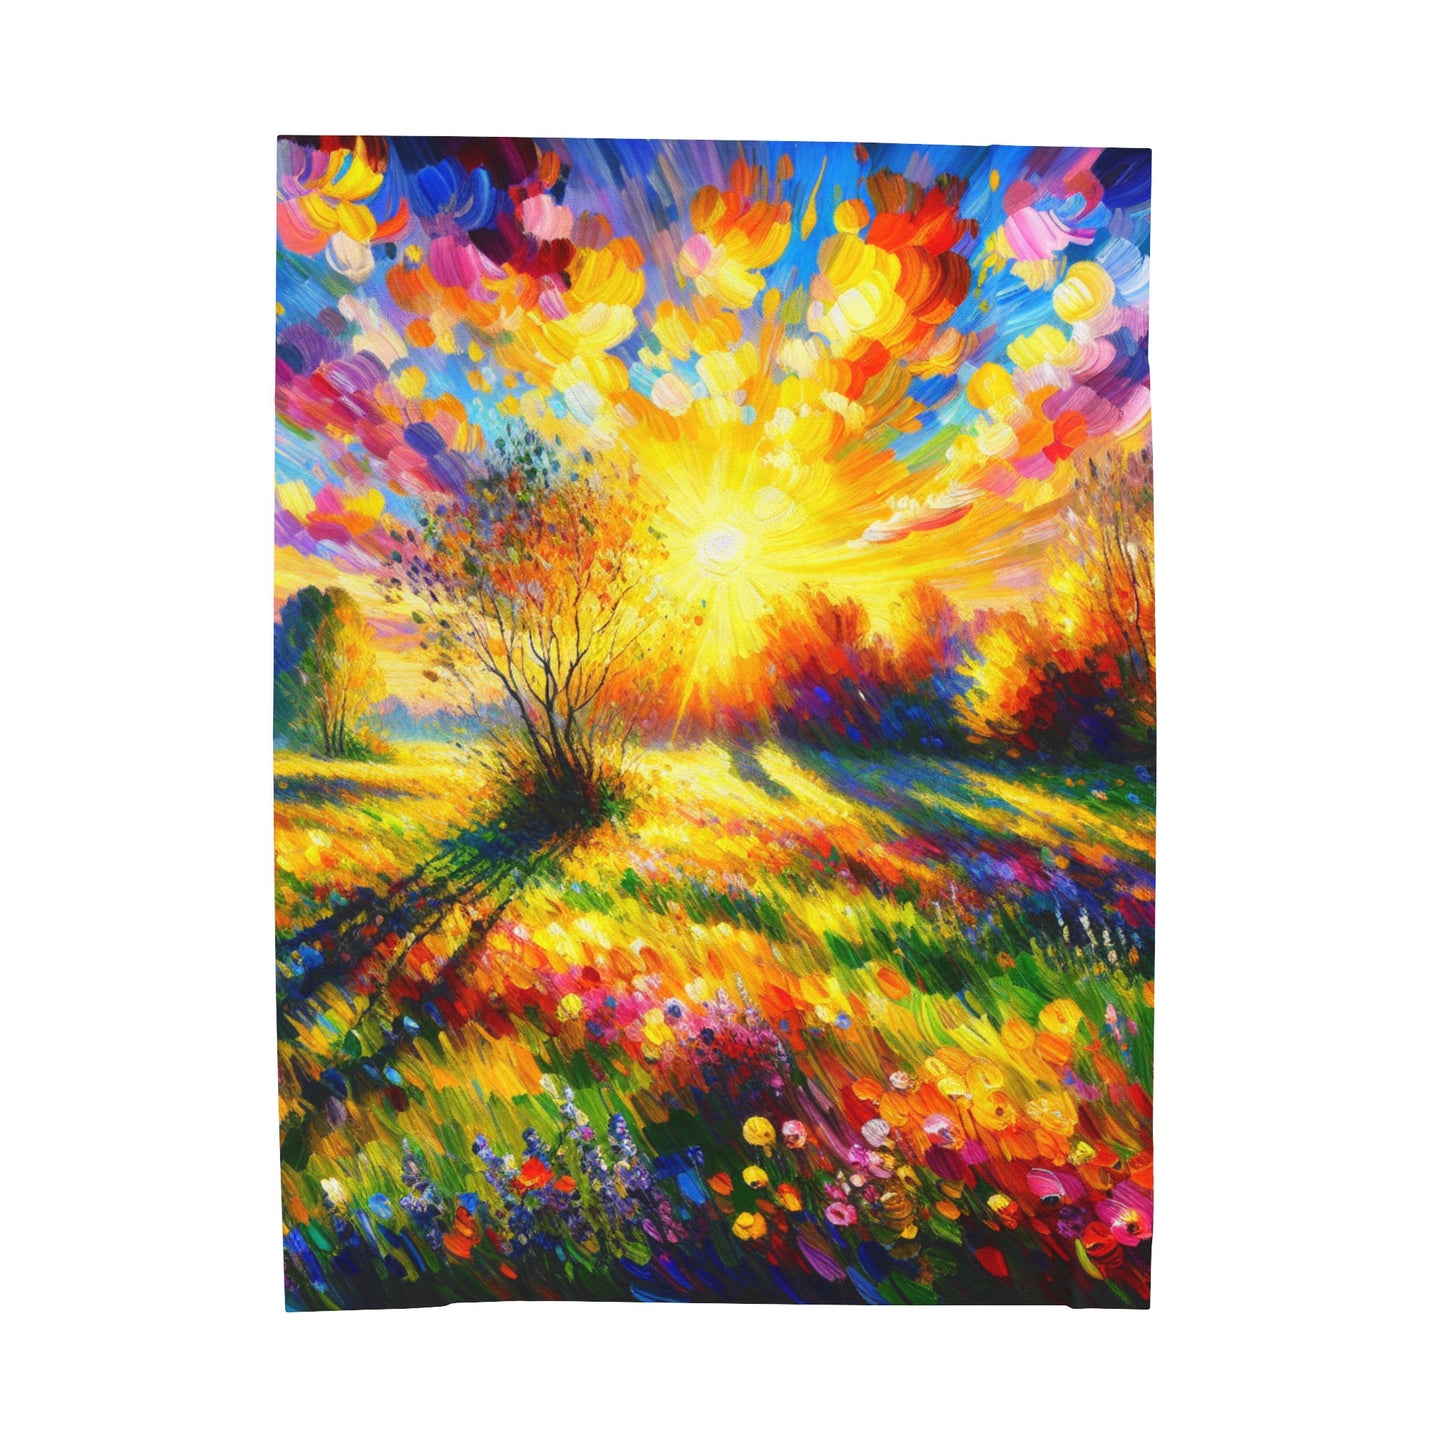 "Vibrant Springtime Sky" - La manta de felpa de pana alienígena estilo fauvismo